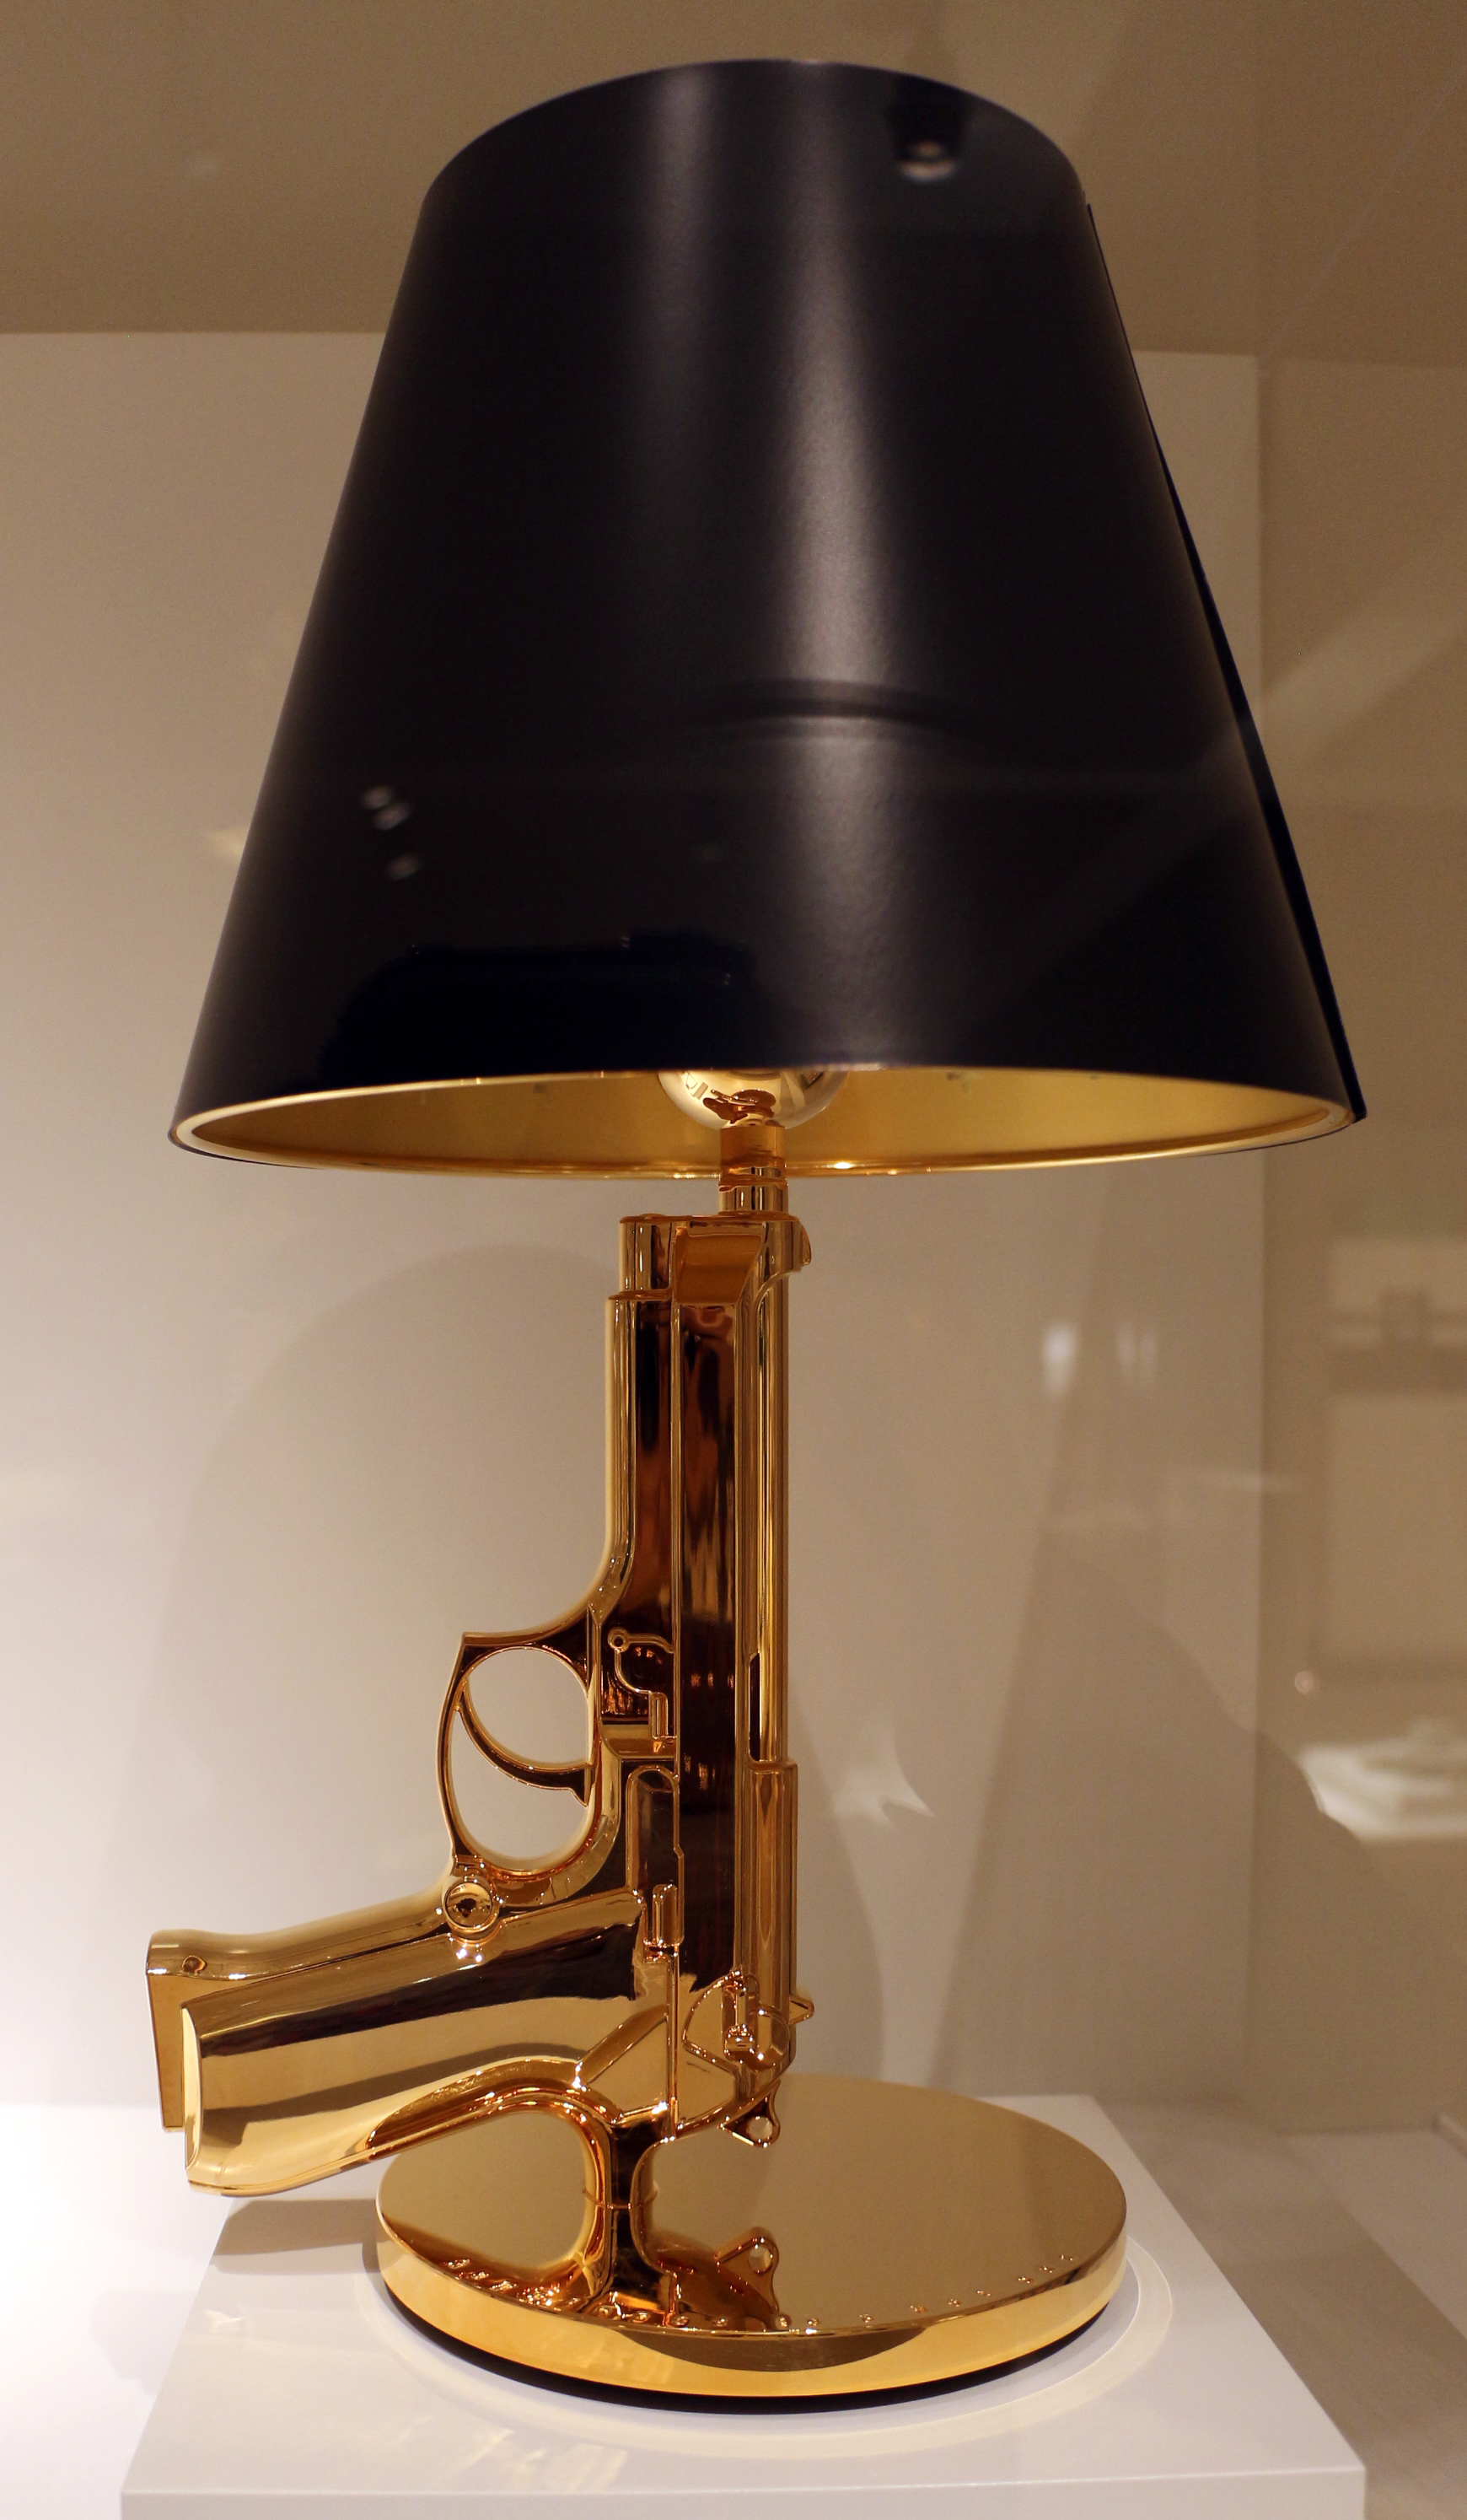 starck per flos spa., lampada bedside gun, una pistola beretta placcata oro, 2005.jpg - Commons